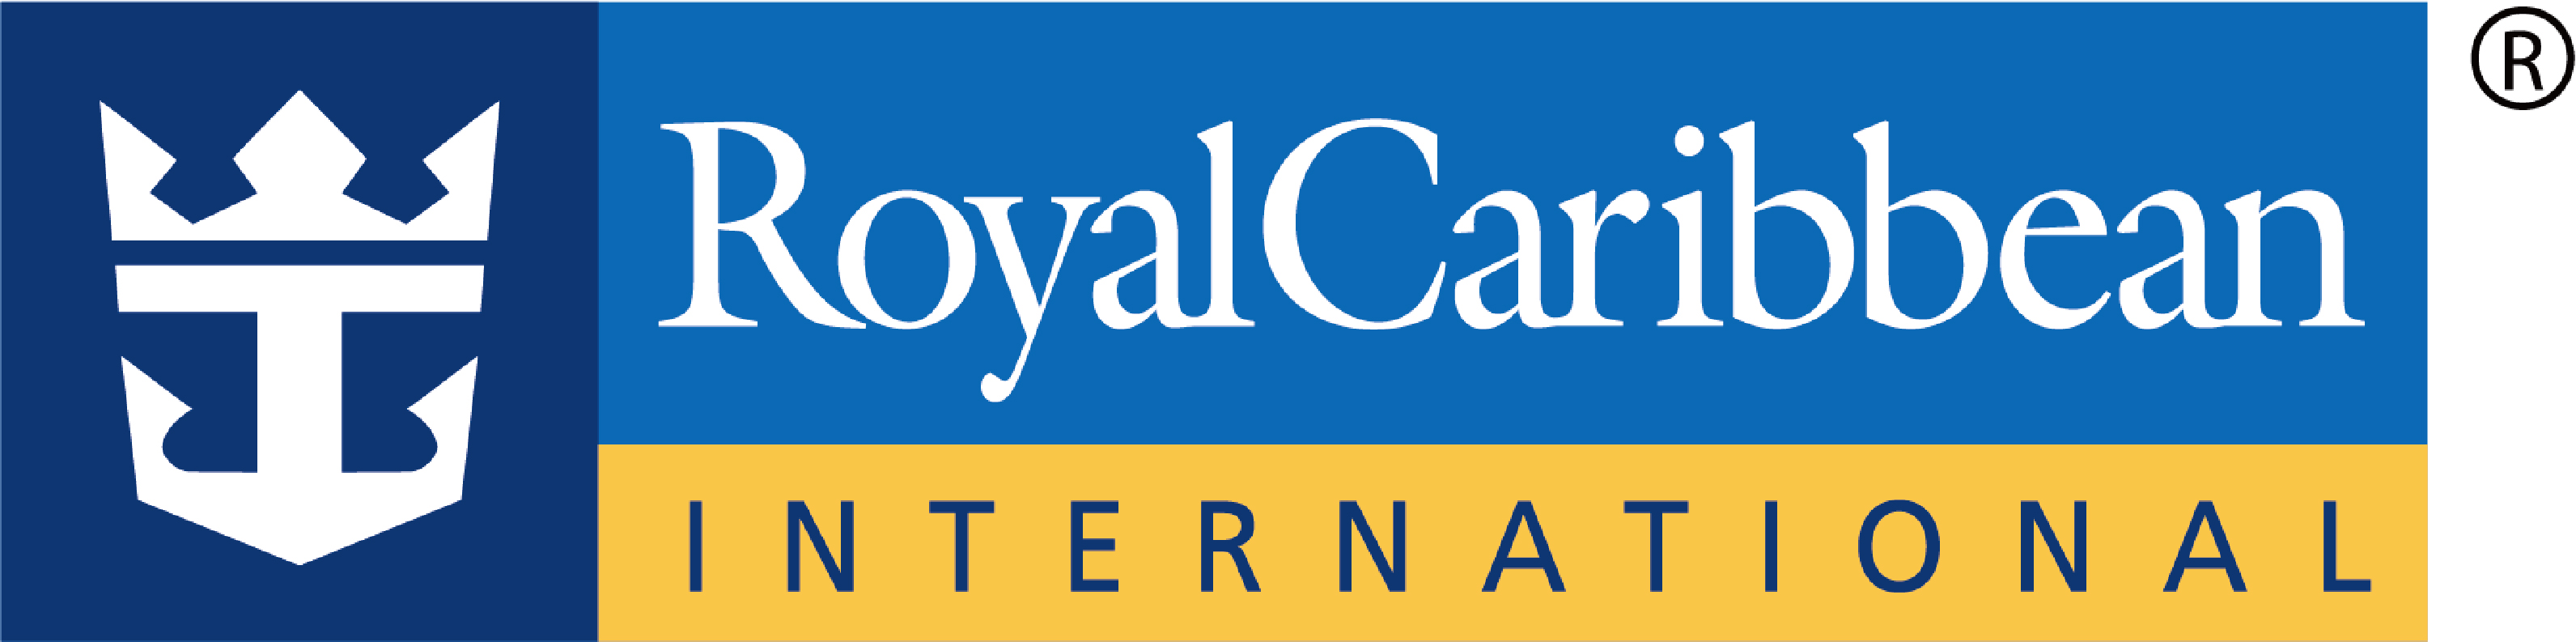 Royal Carabbean International